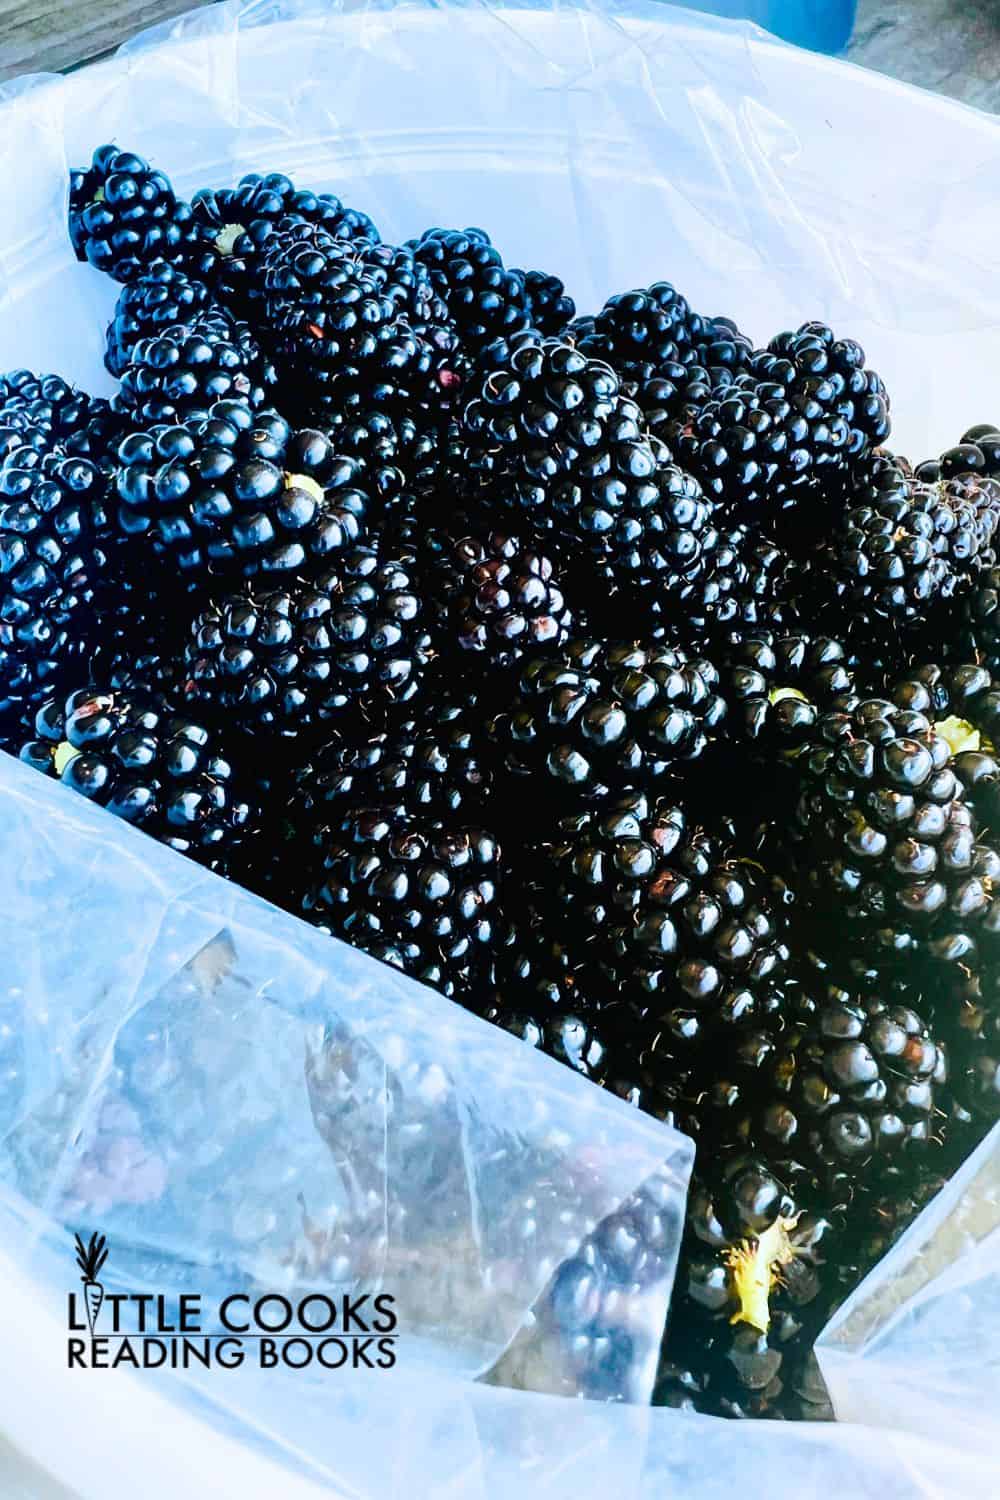 Fresh Blackberries For Dessert Recipes in a white bucket after fresh picking